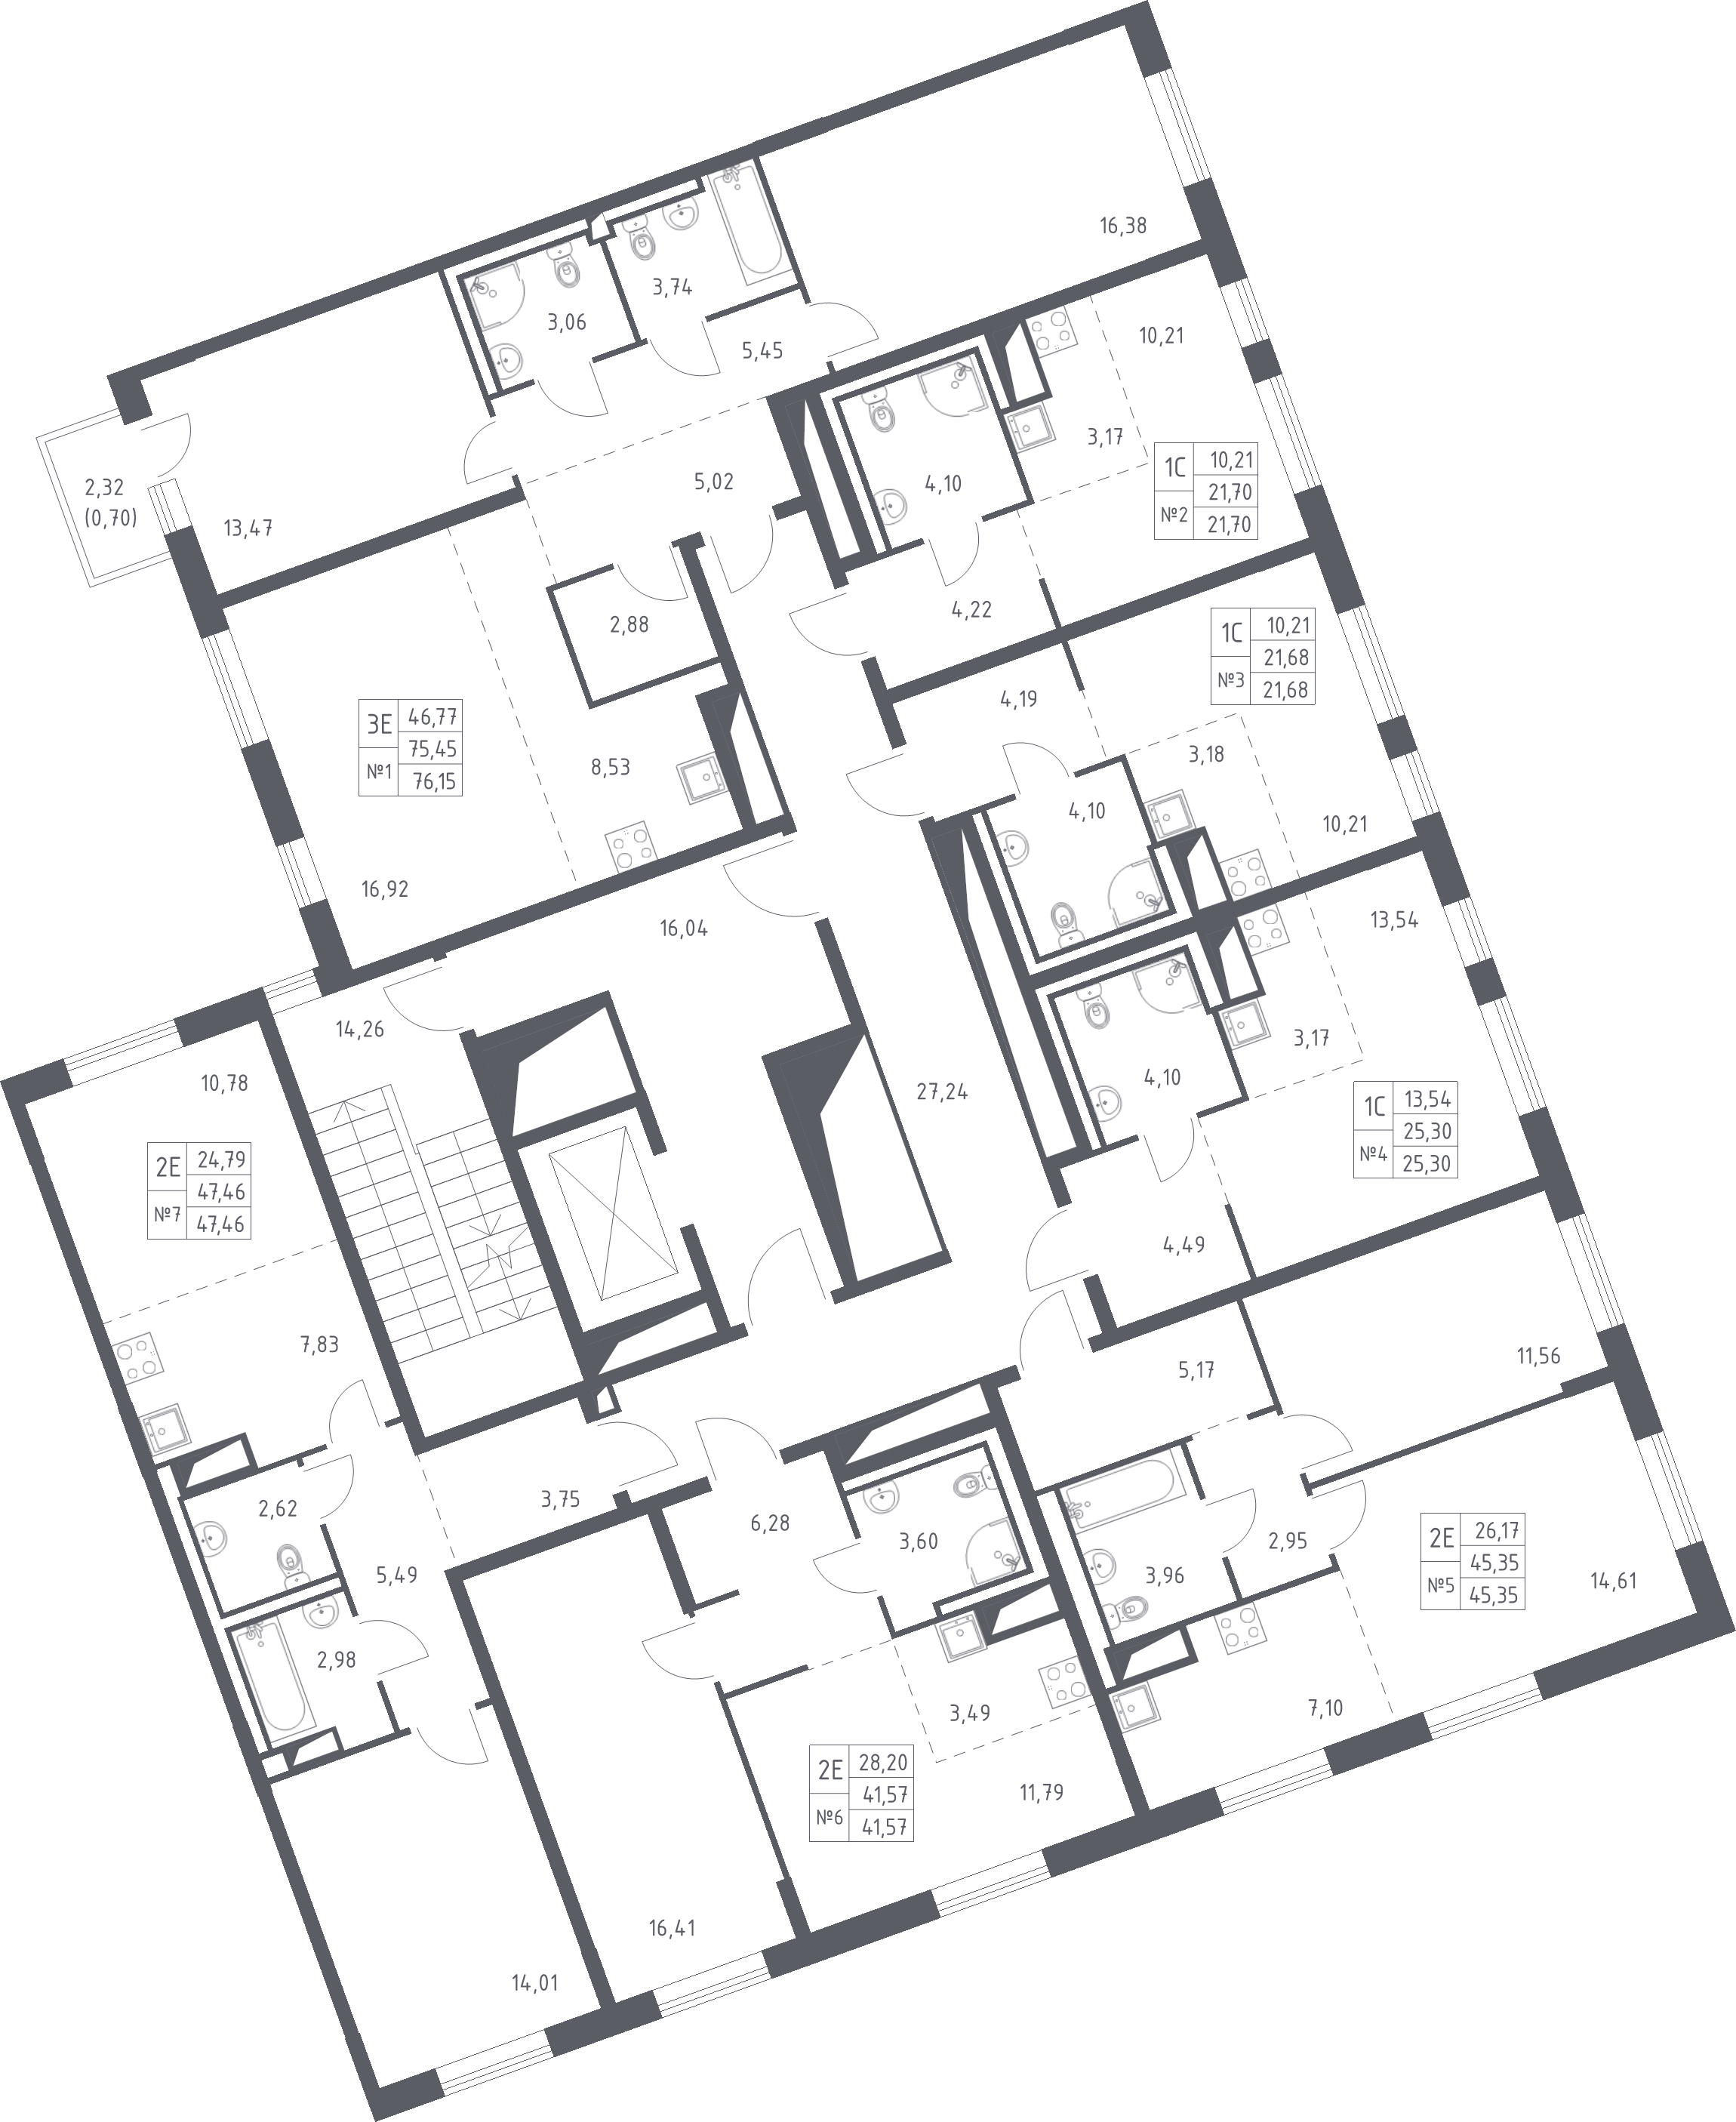 2-комнатная (Евро) квартира, 41.57 м² - планировка этажа